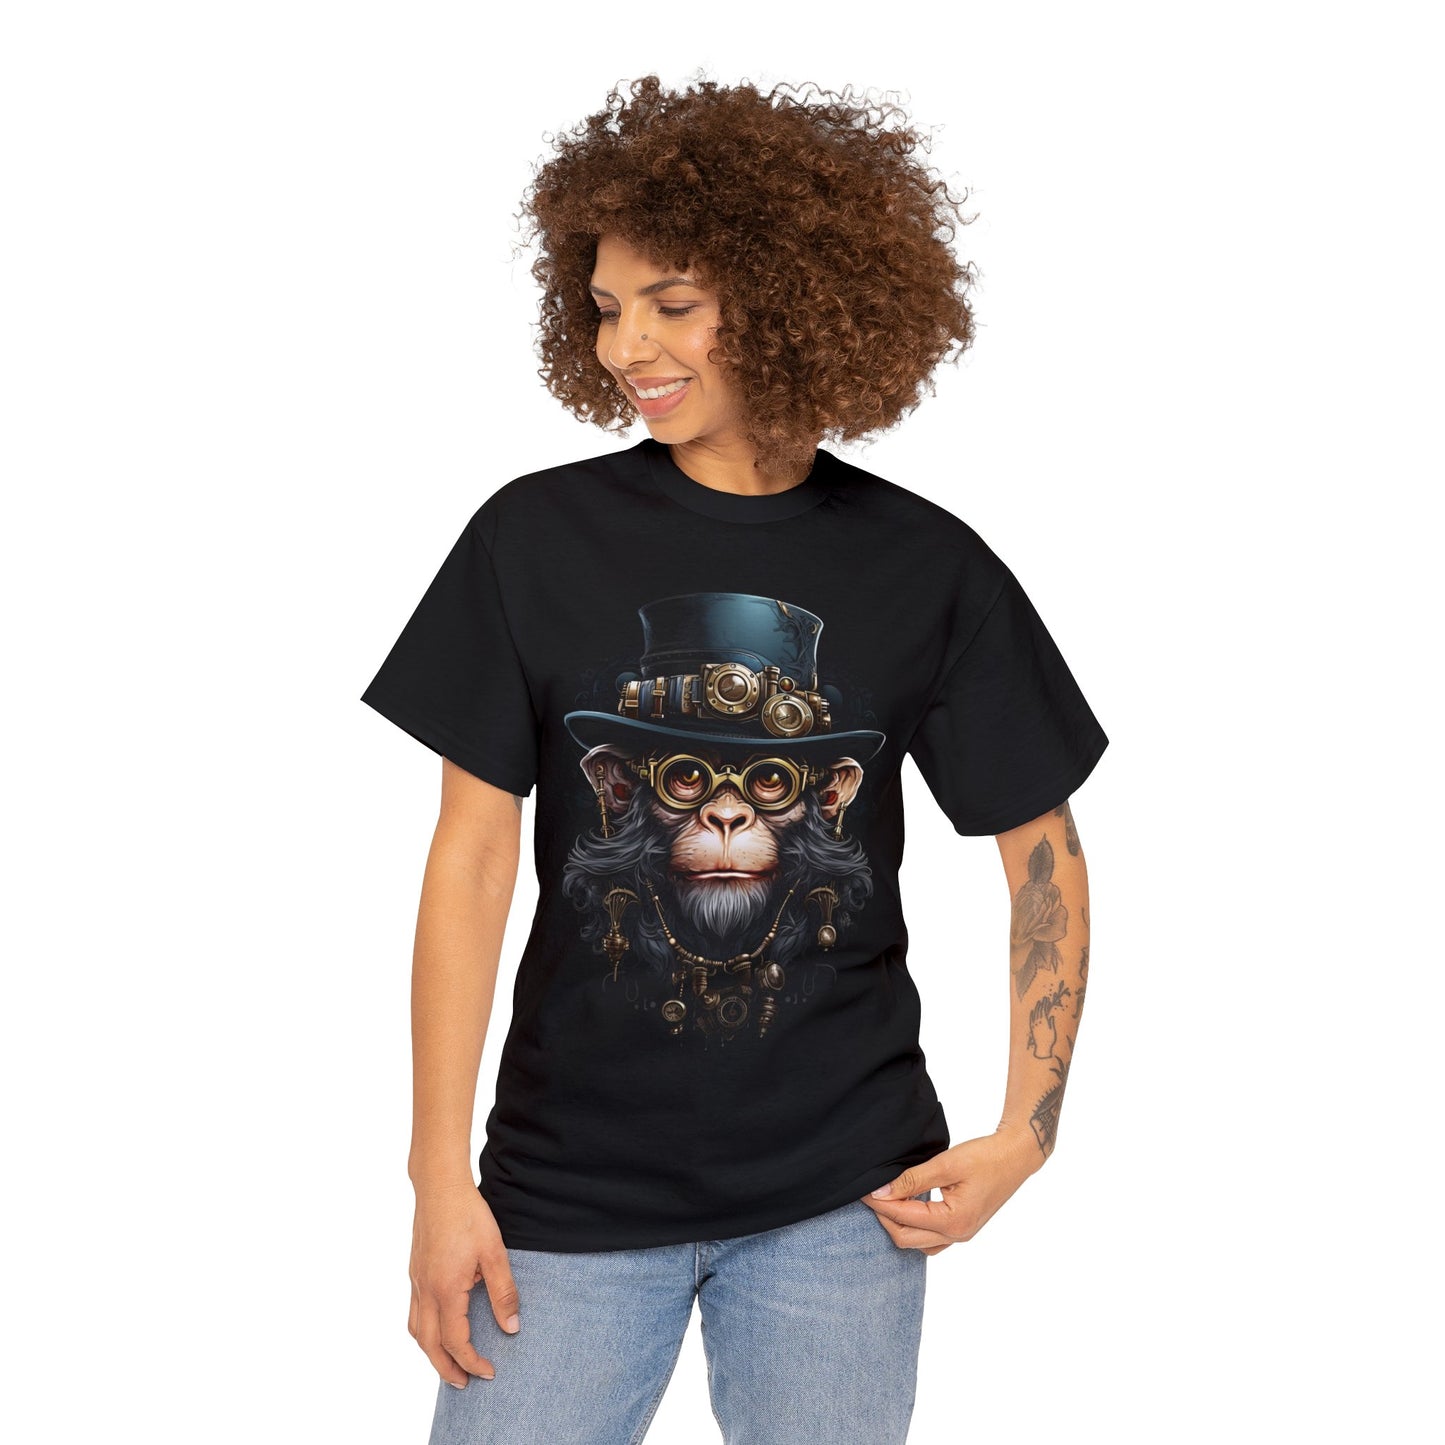 Steampunk Monkey Chimp Ape Graphic Design Tee